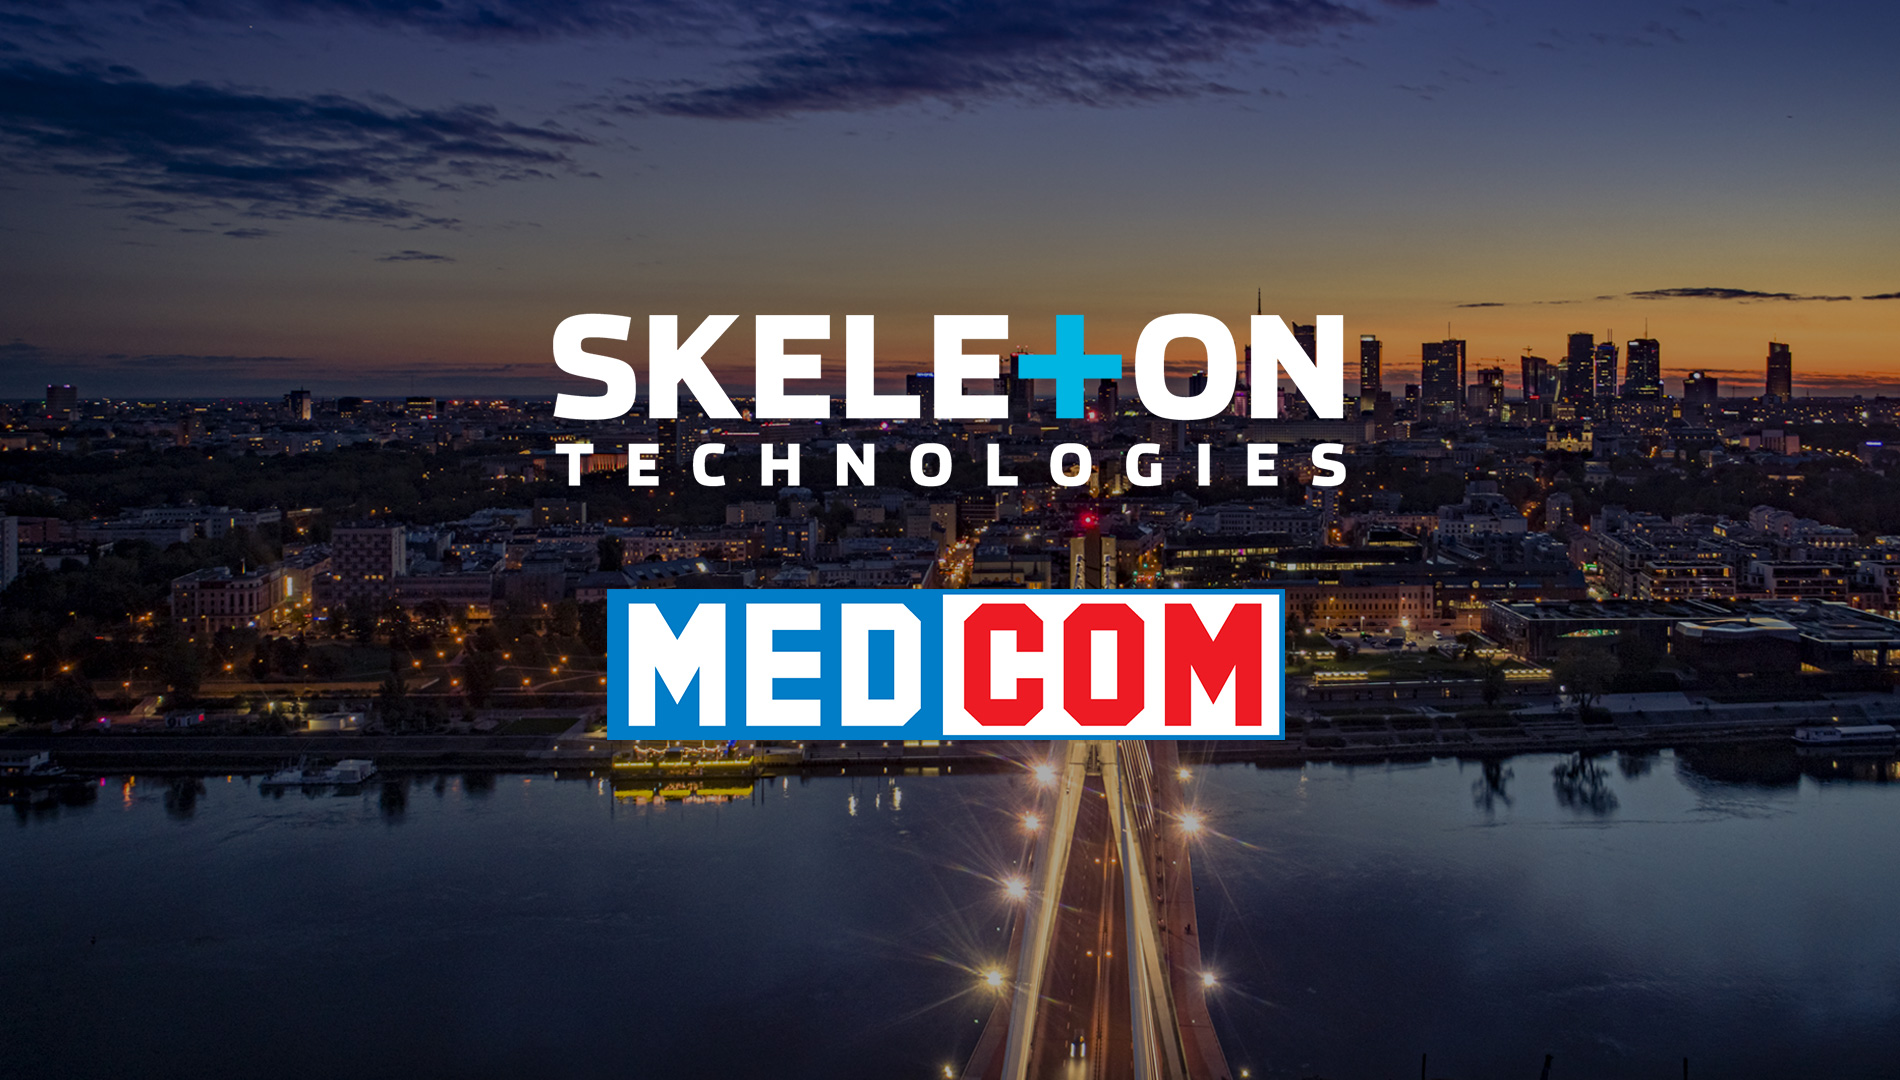 Skeleton Technologies Medcom Warsaw tram